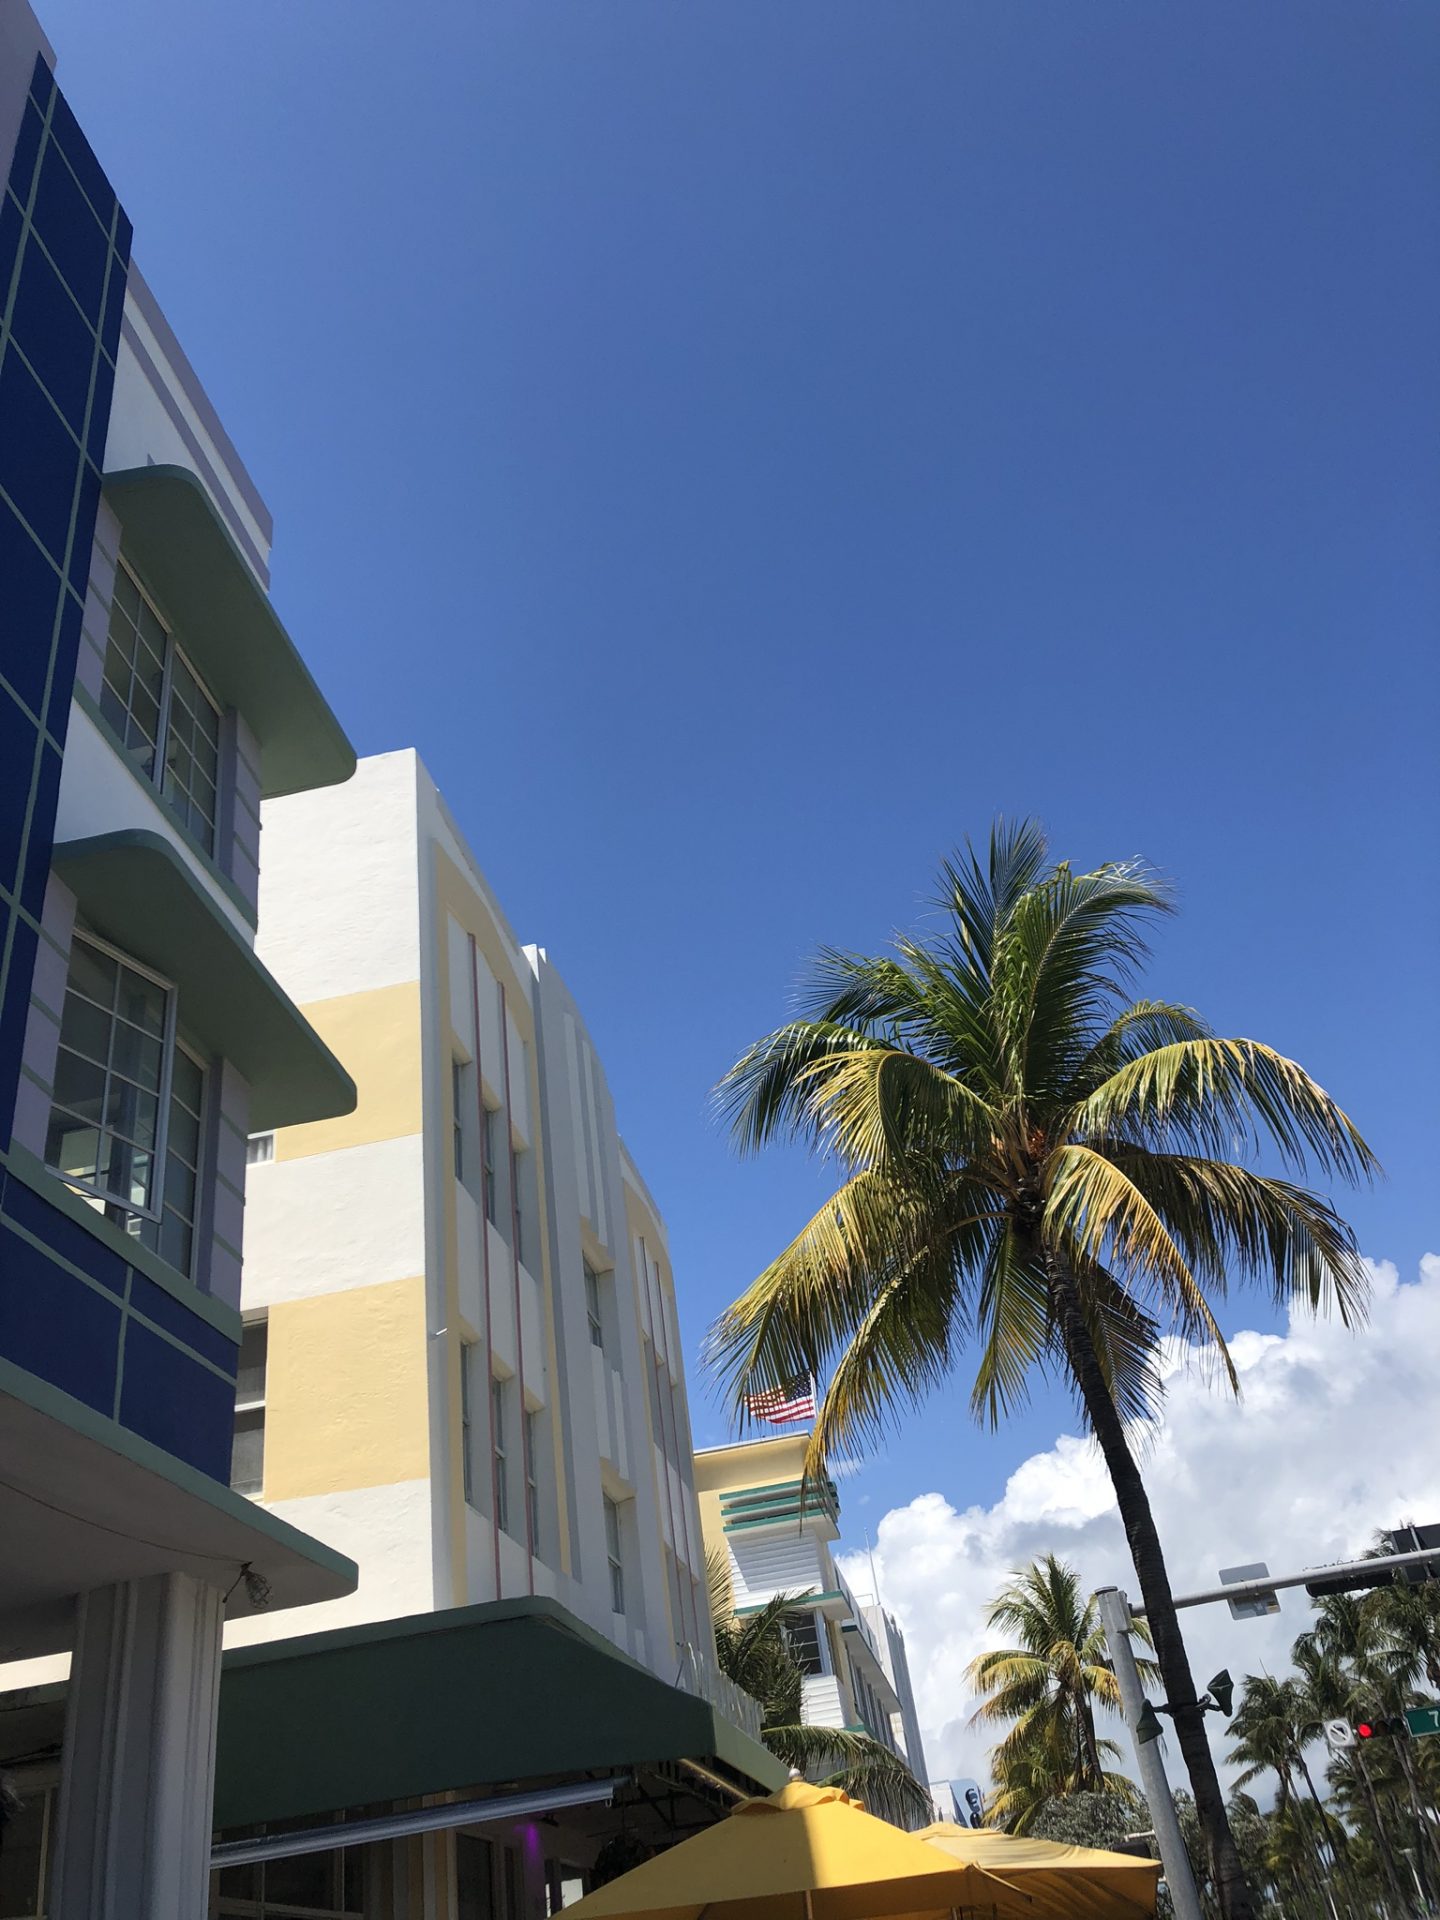 Art deco buildings on Ocean Drive, Florida